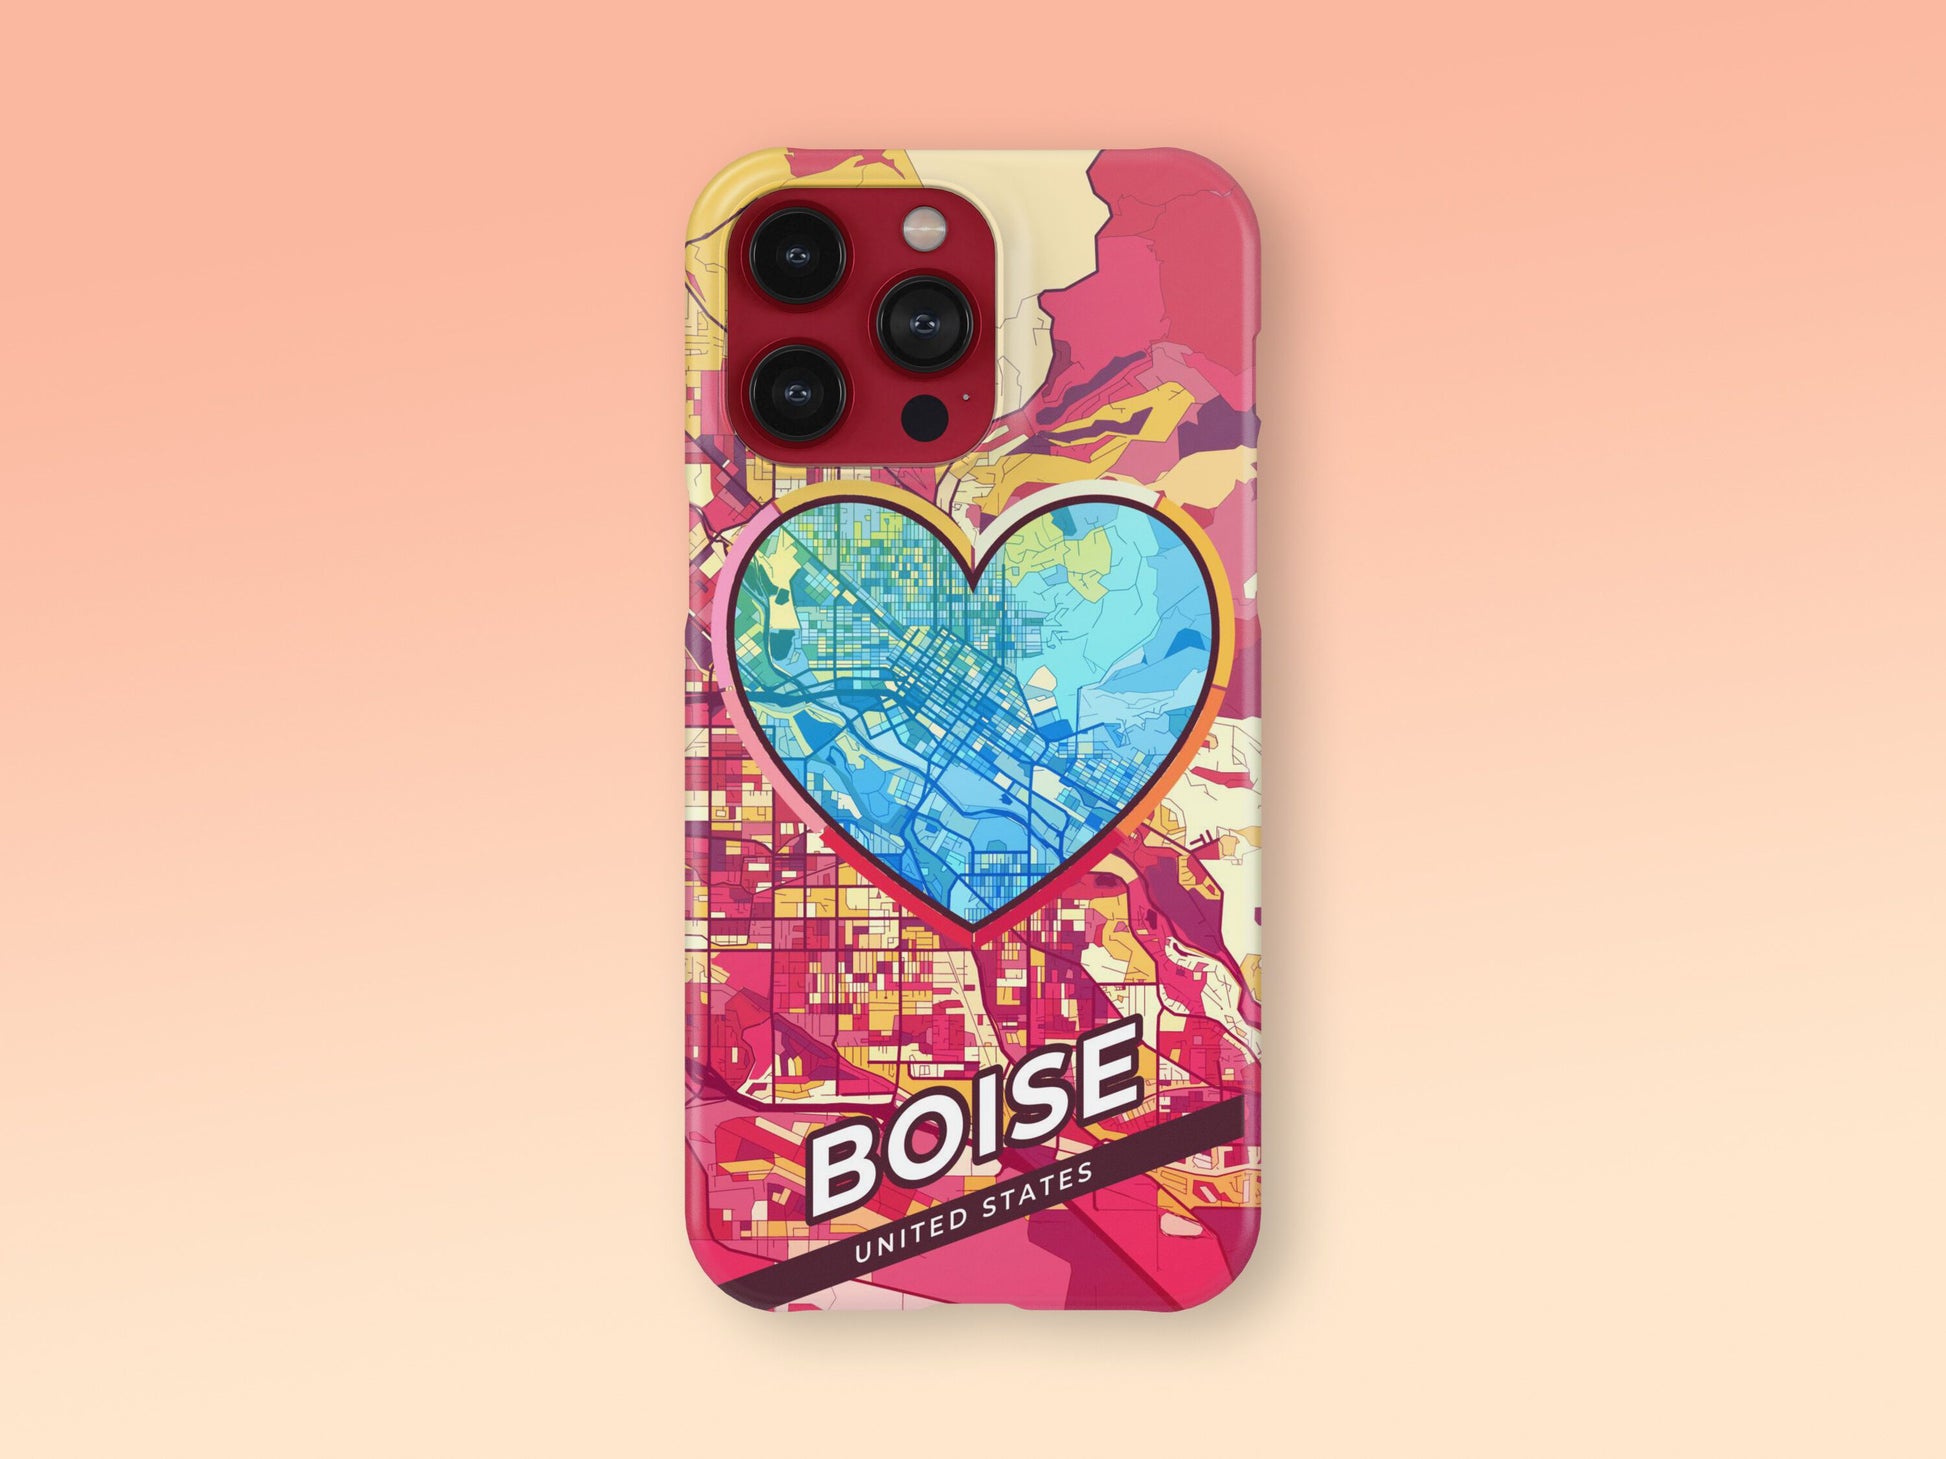 Boise Idaho slim phone case with colorful icon. Birthday, wedding or housewarming gift. Couple match cases. 2